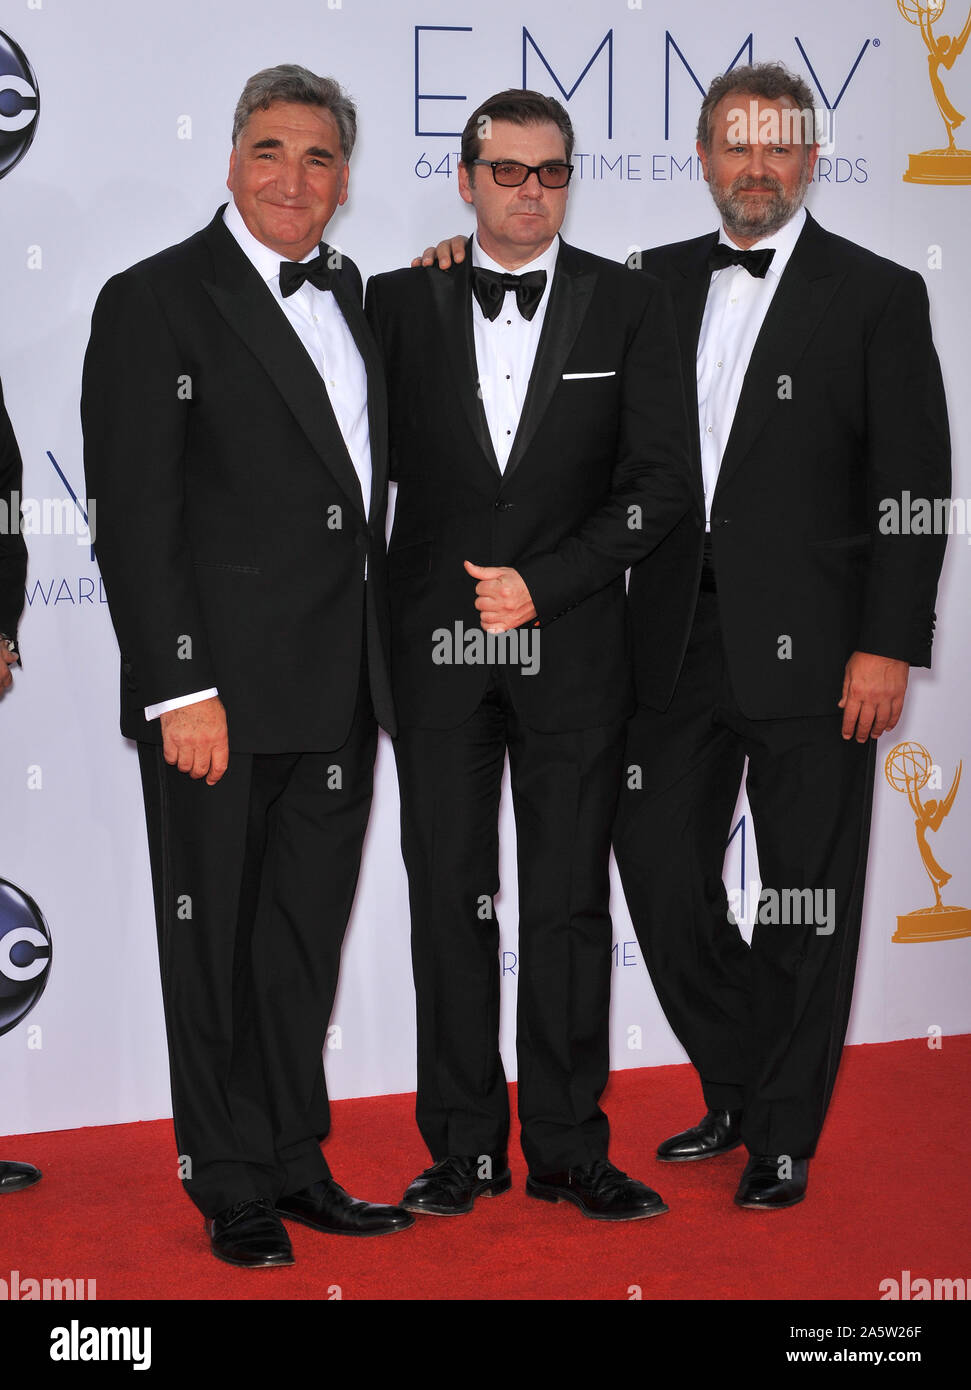 LOS ANGELES, CA. September 23, 2012: Downton Abbey stars Hugh Bonneville, Brendan Coyle & Jim Carter at the 64th Primetime Emmy Awards at the Nokia Theatre LA Live. © 2012 Paul Smith / Featureflash Stock Photo